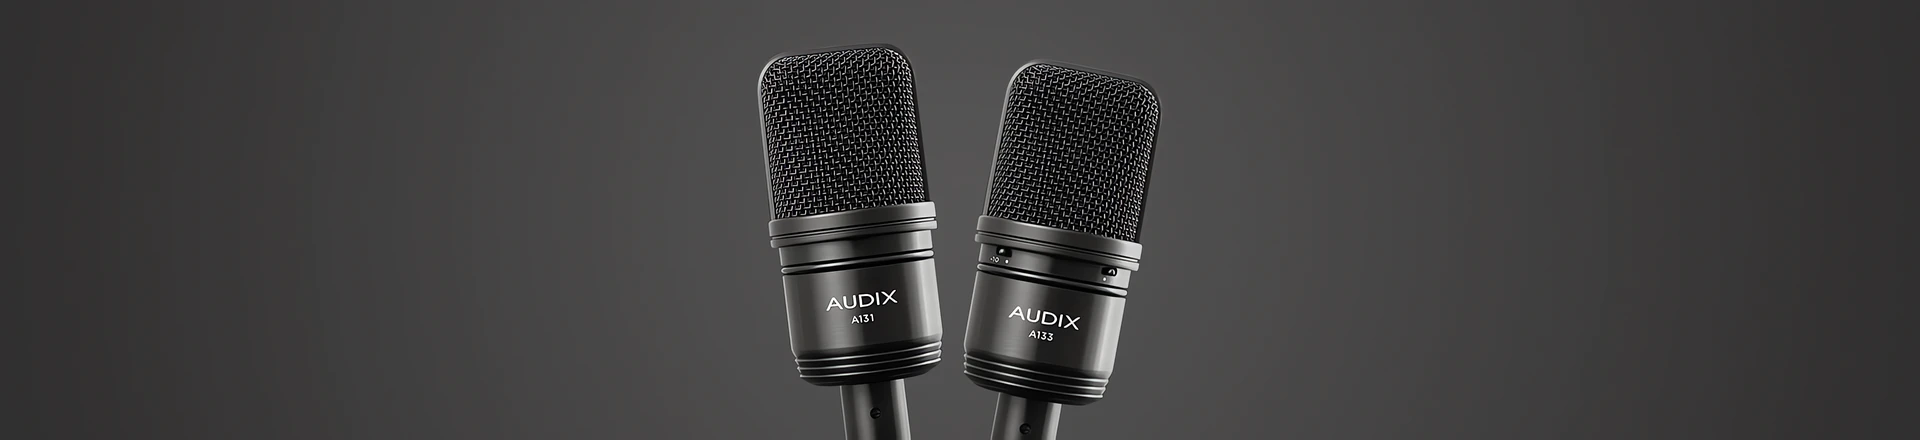 A131 &amp; A133 - Nowe mikrofony studyjne od Audix